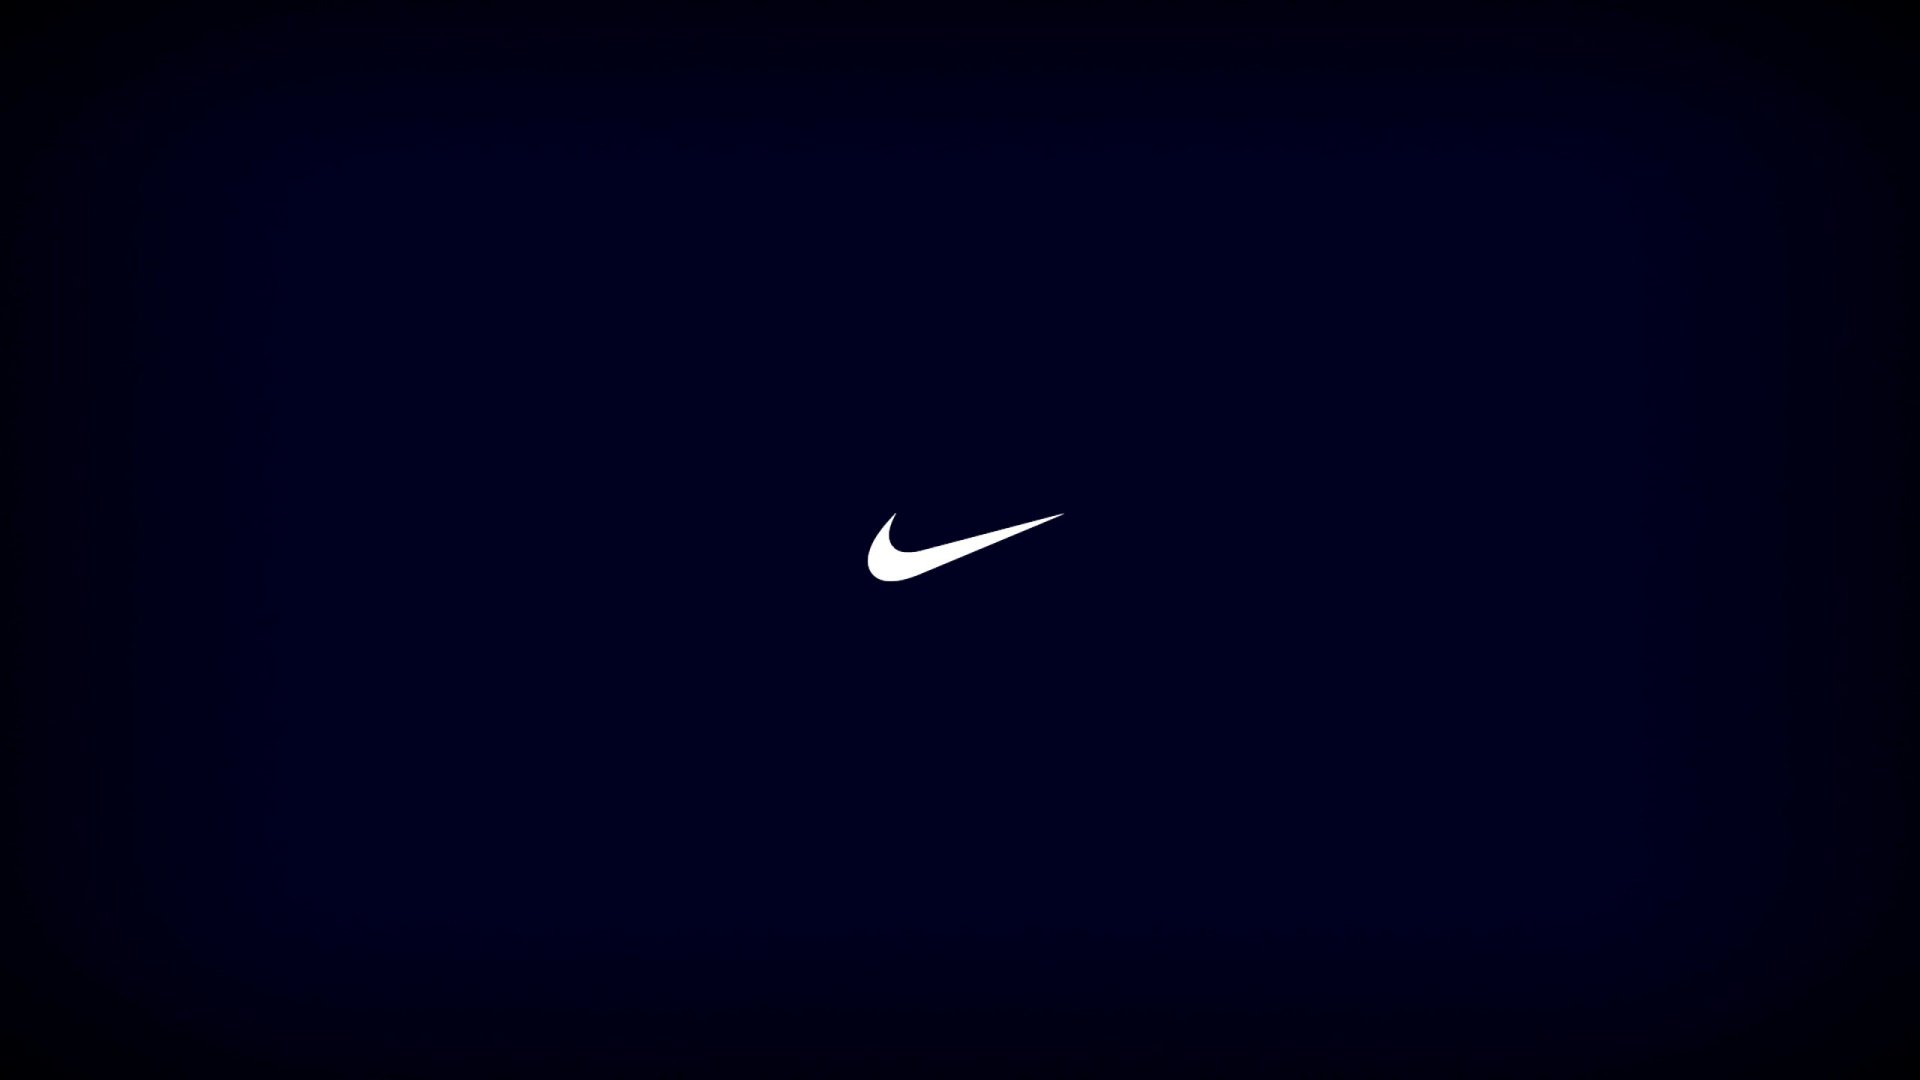 Nike Logo Gray Background Wallpaper Download 6940